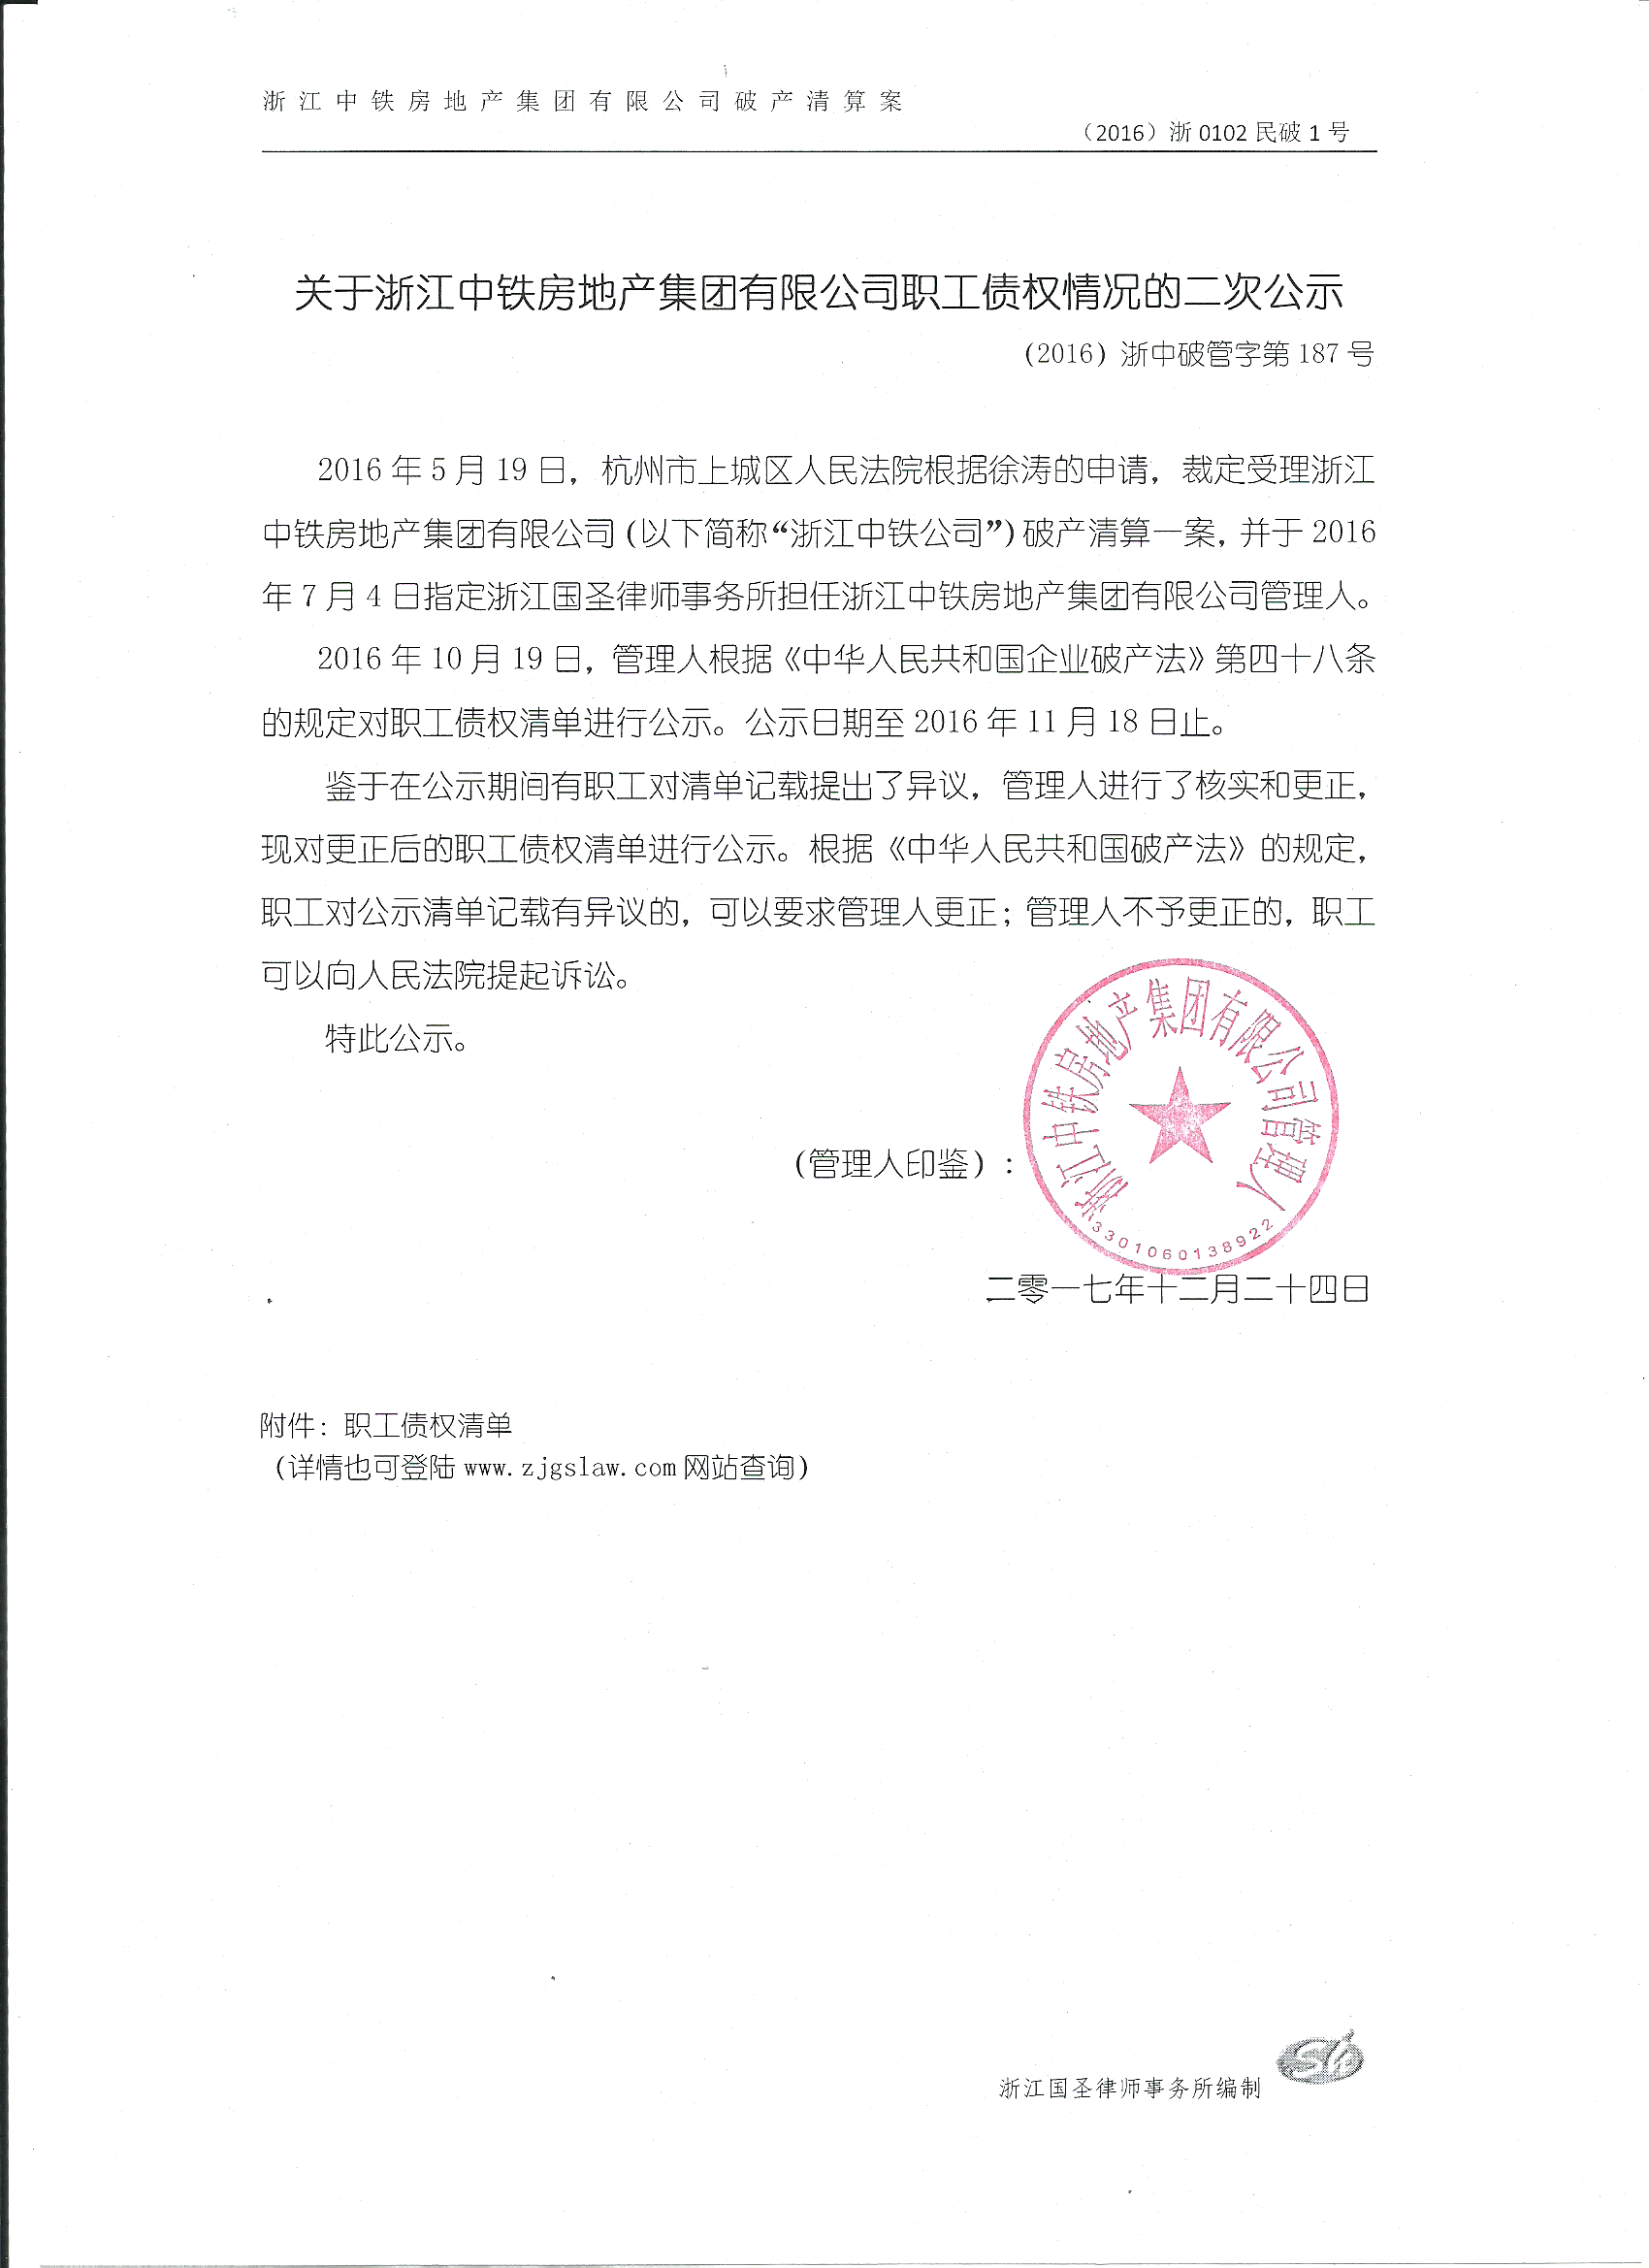 <b>关于浙江中铁房地产集团有限公司职工债权情况的二次公示</b>